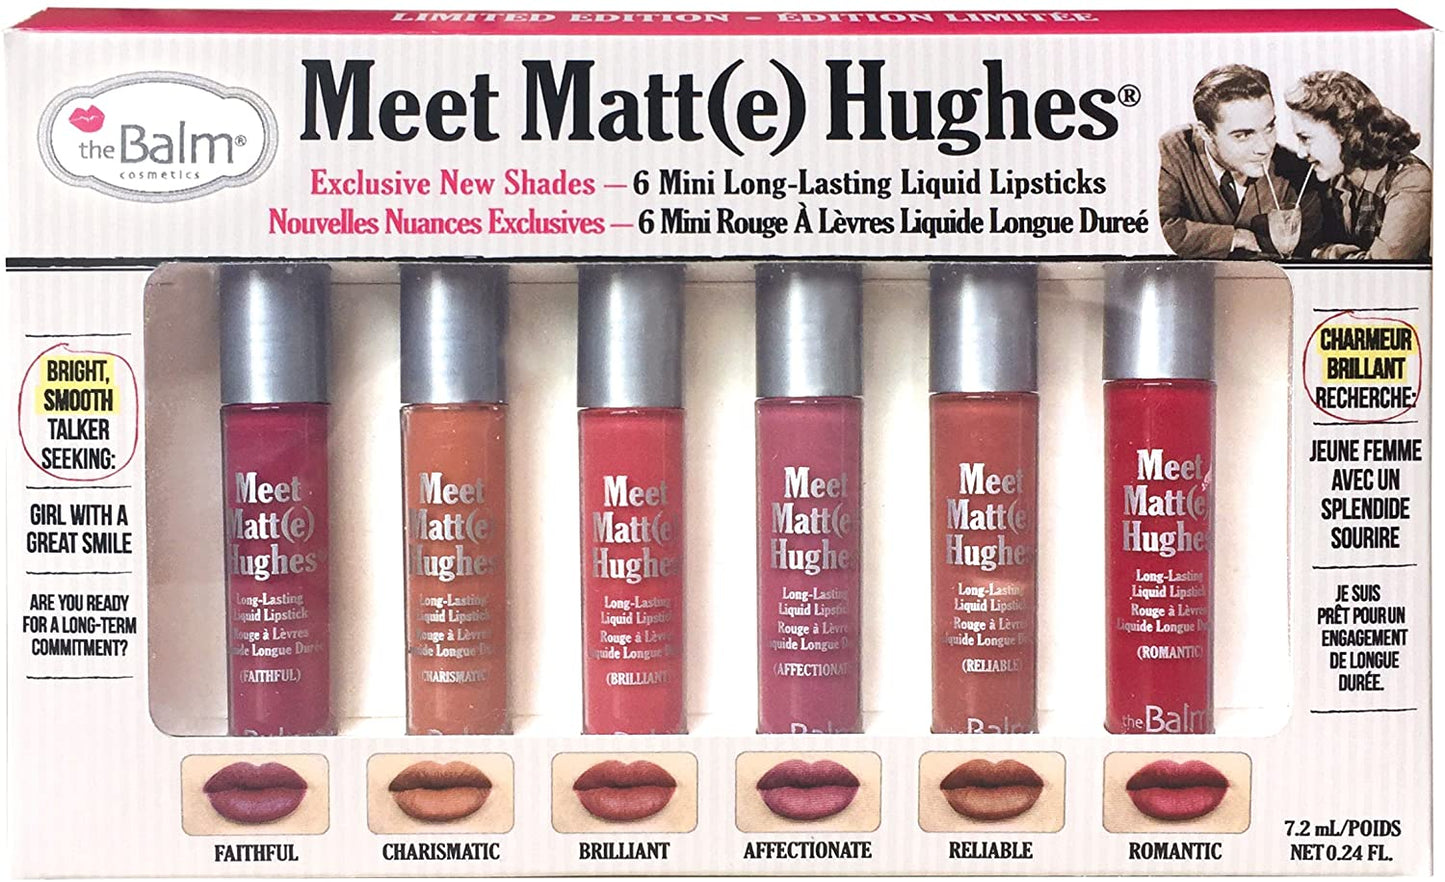 theBalm Cosmetics Meet Matte Hughes Volume 2 Set of 6 Mini Long-Lasting Liquid Lipsticks